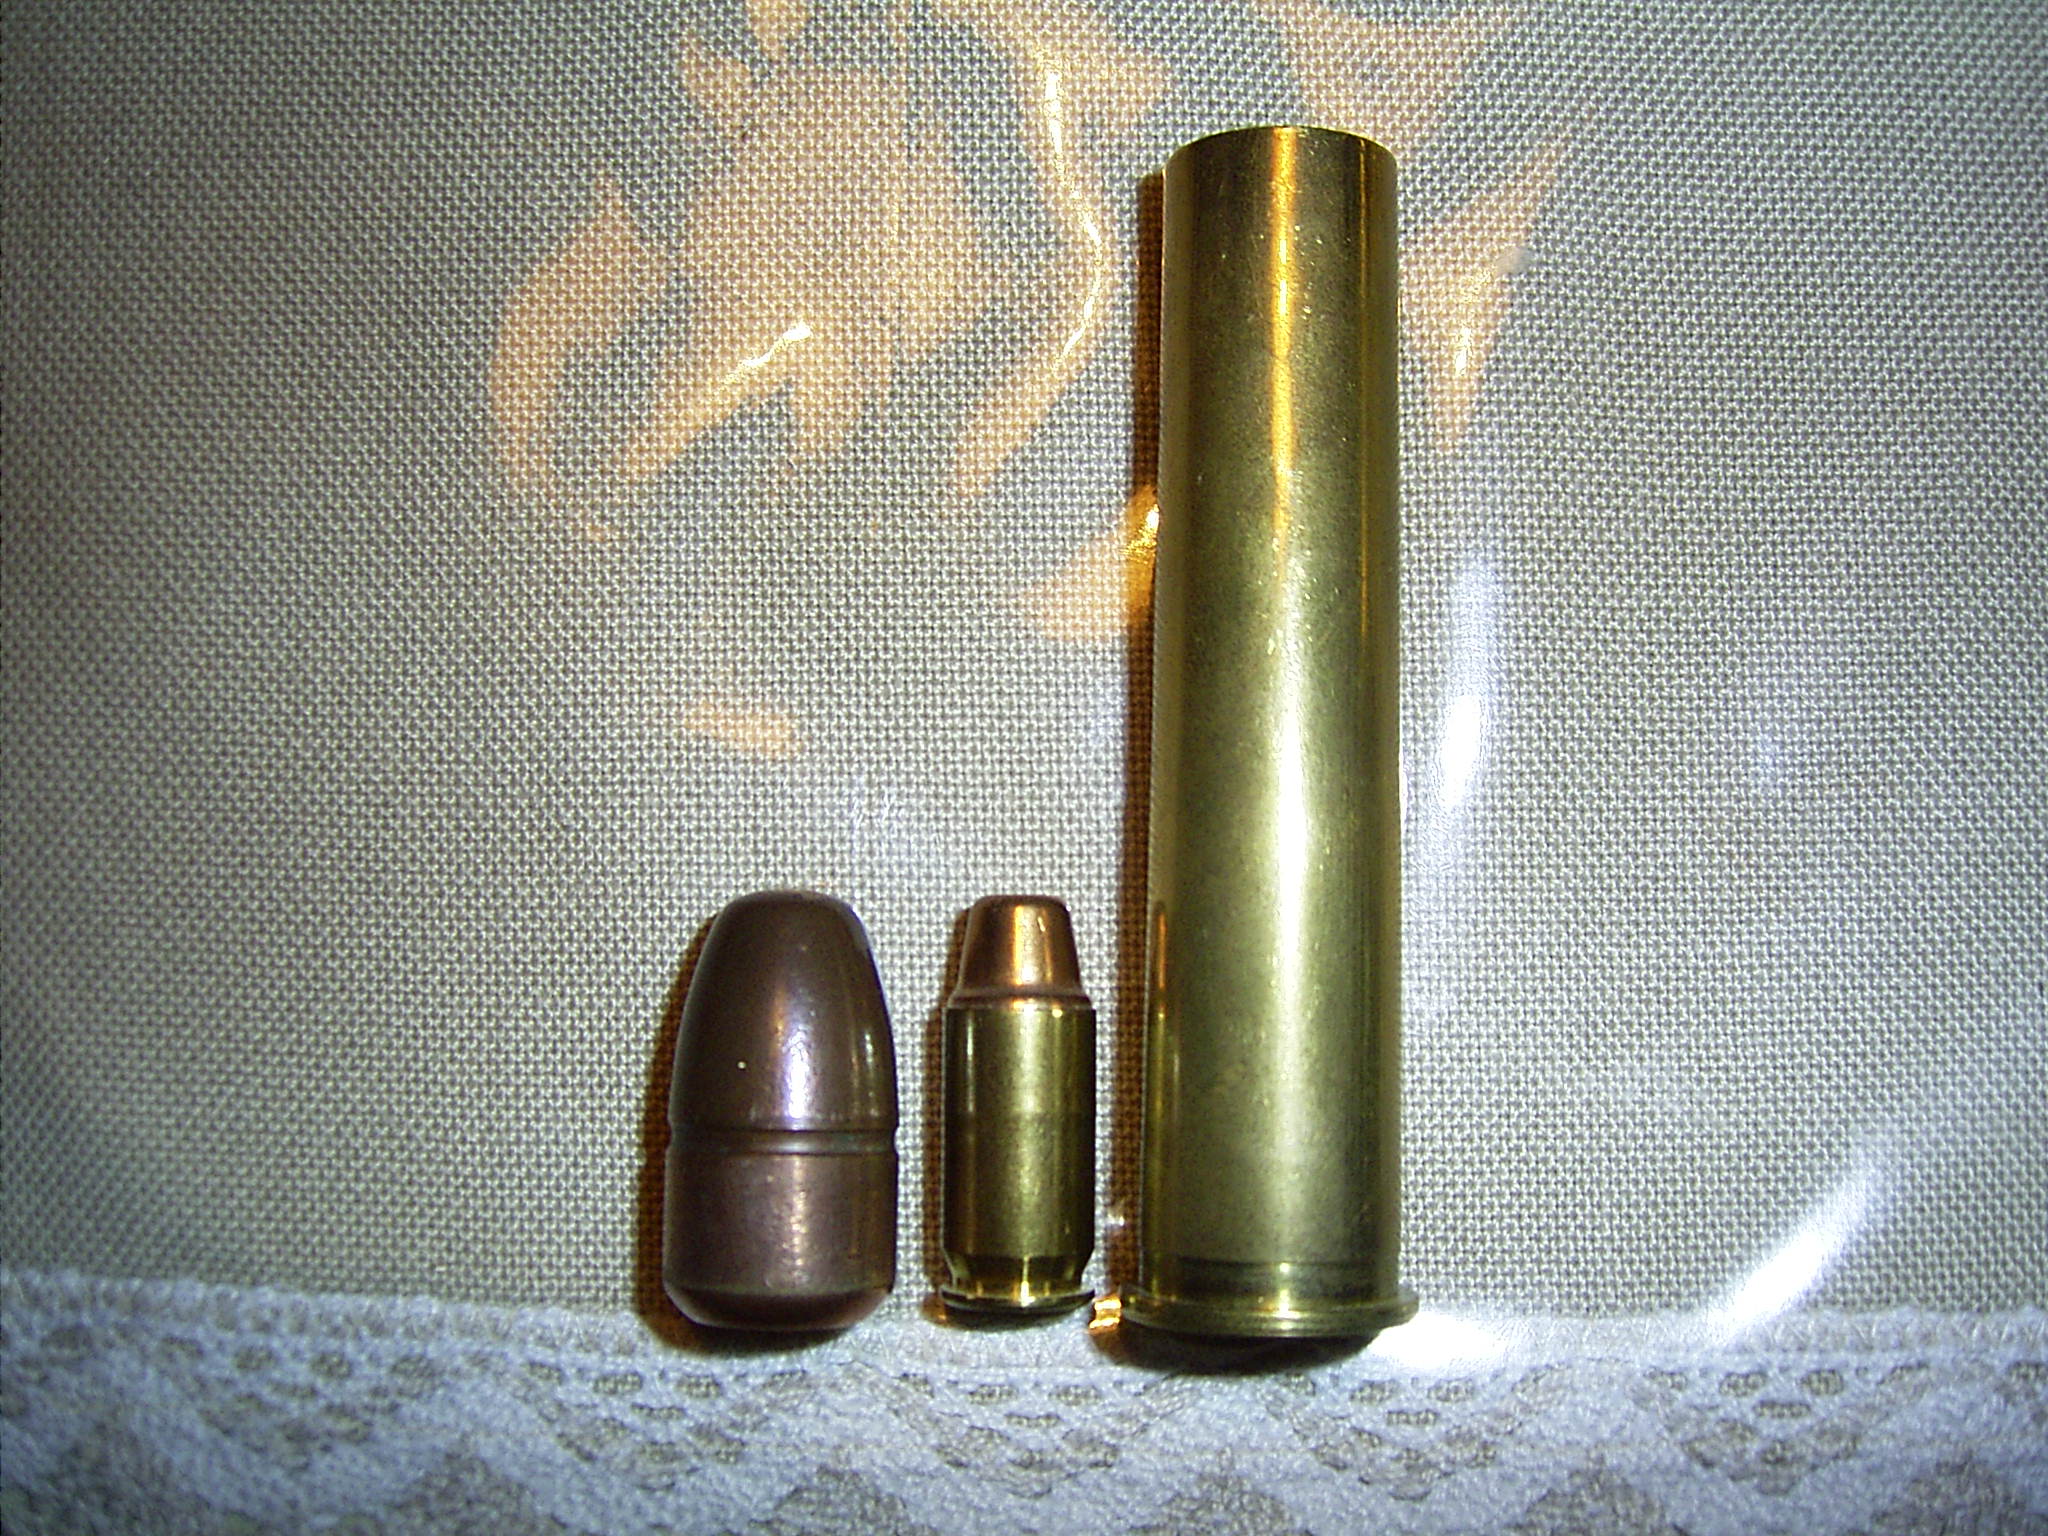 Nitro-What insensitive explosive ammunition